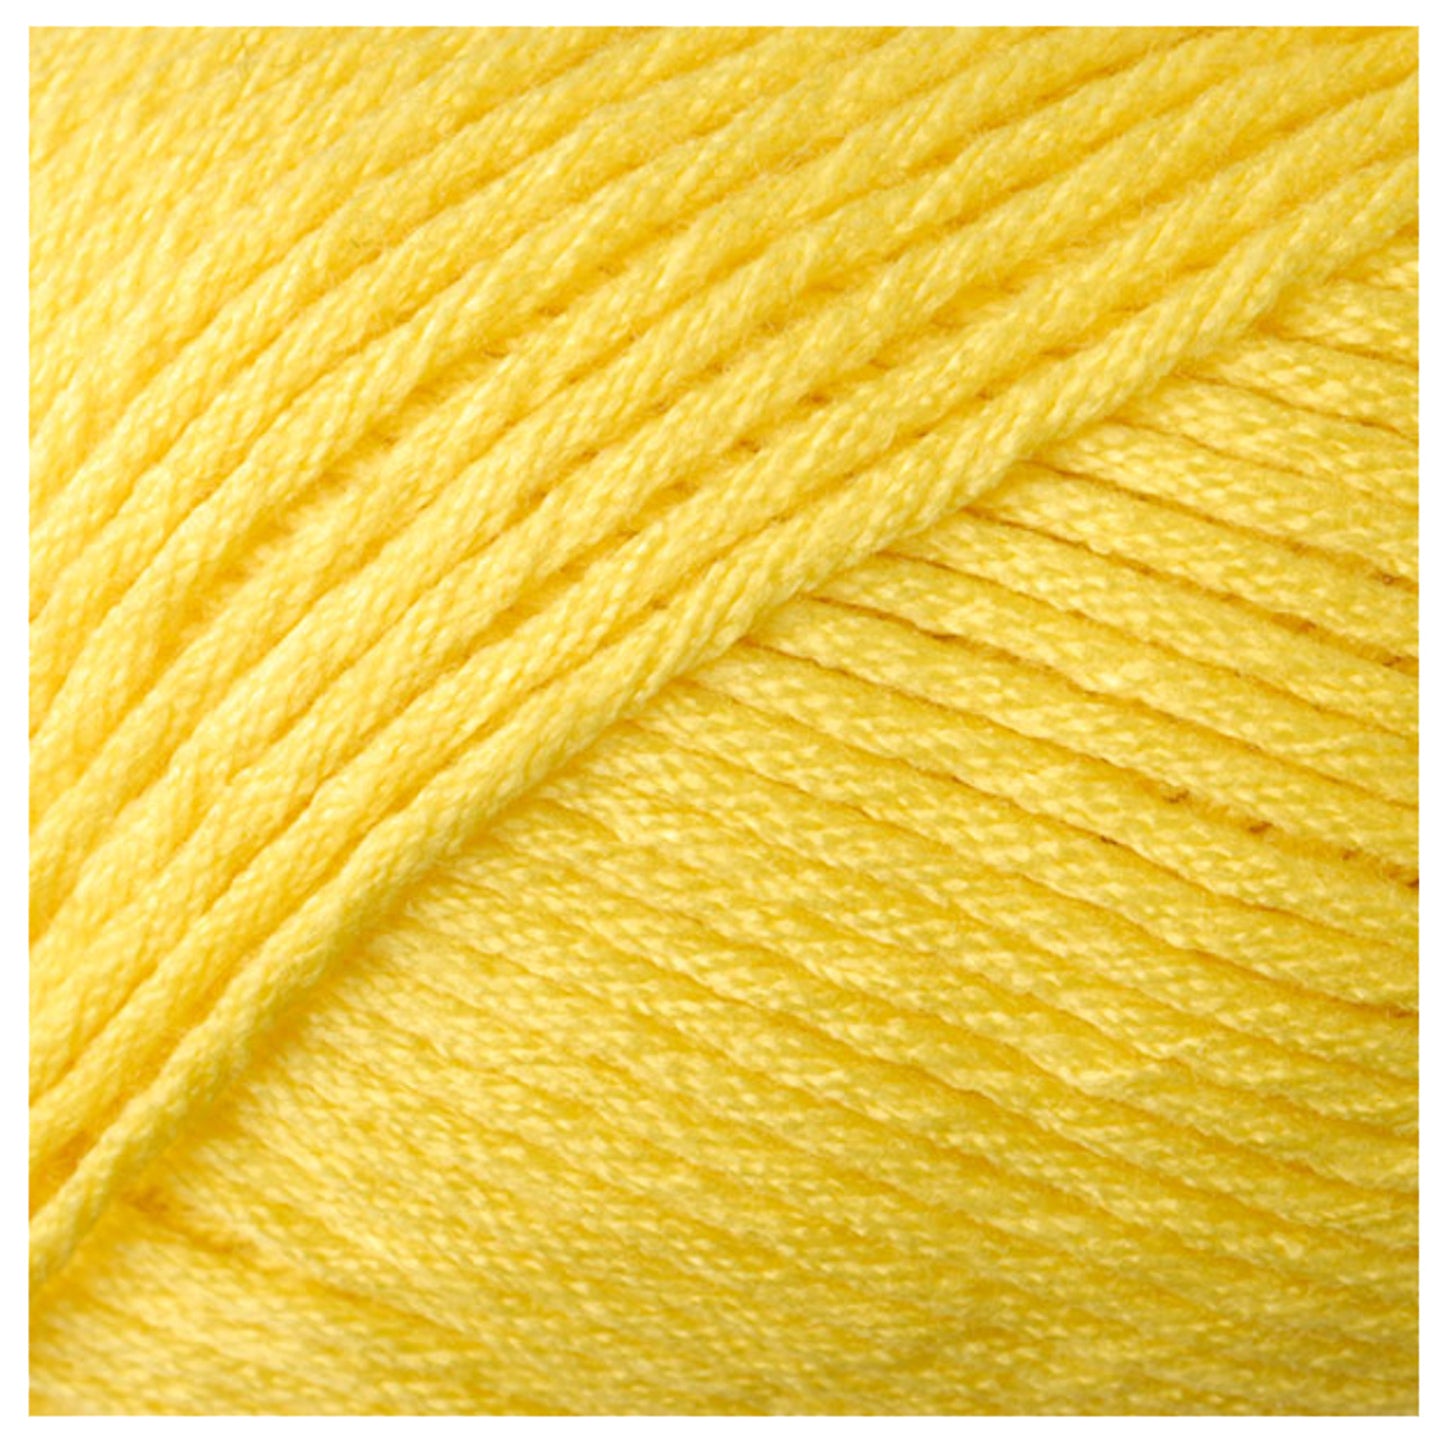 Colorful Crochet Skirt/Cowl - L/1X/2X/3X/4X - Collegiate Crochet Kit Alternative View #2